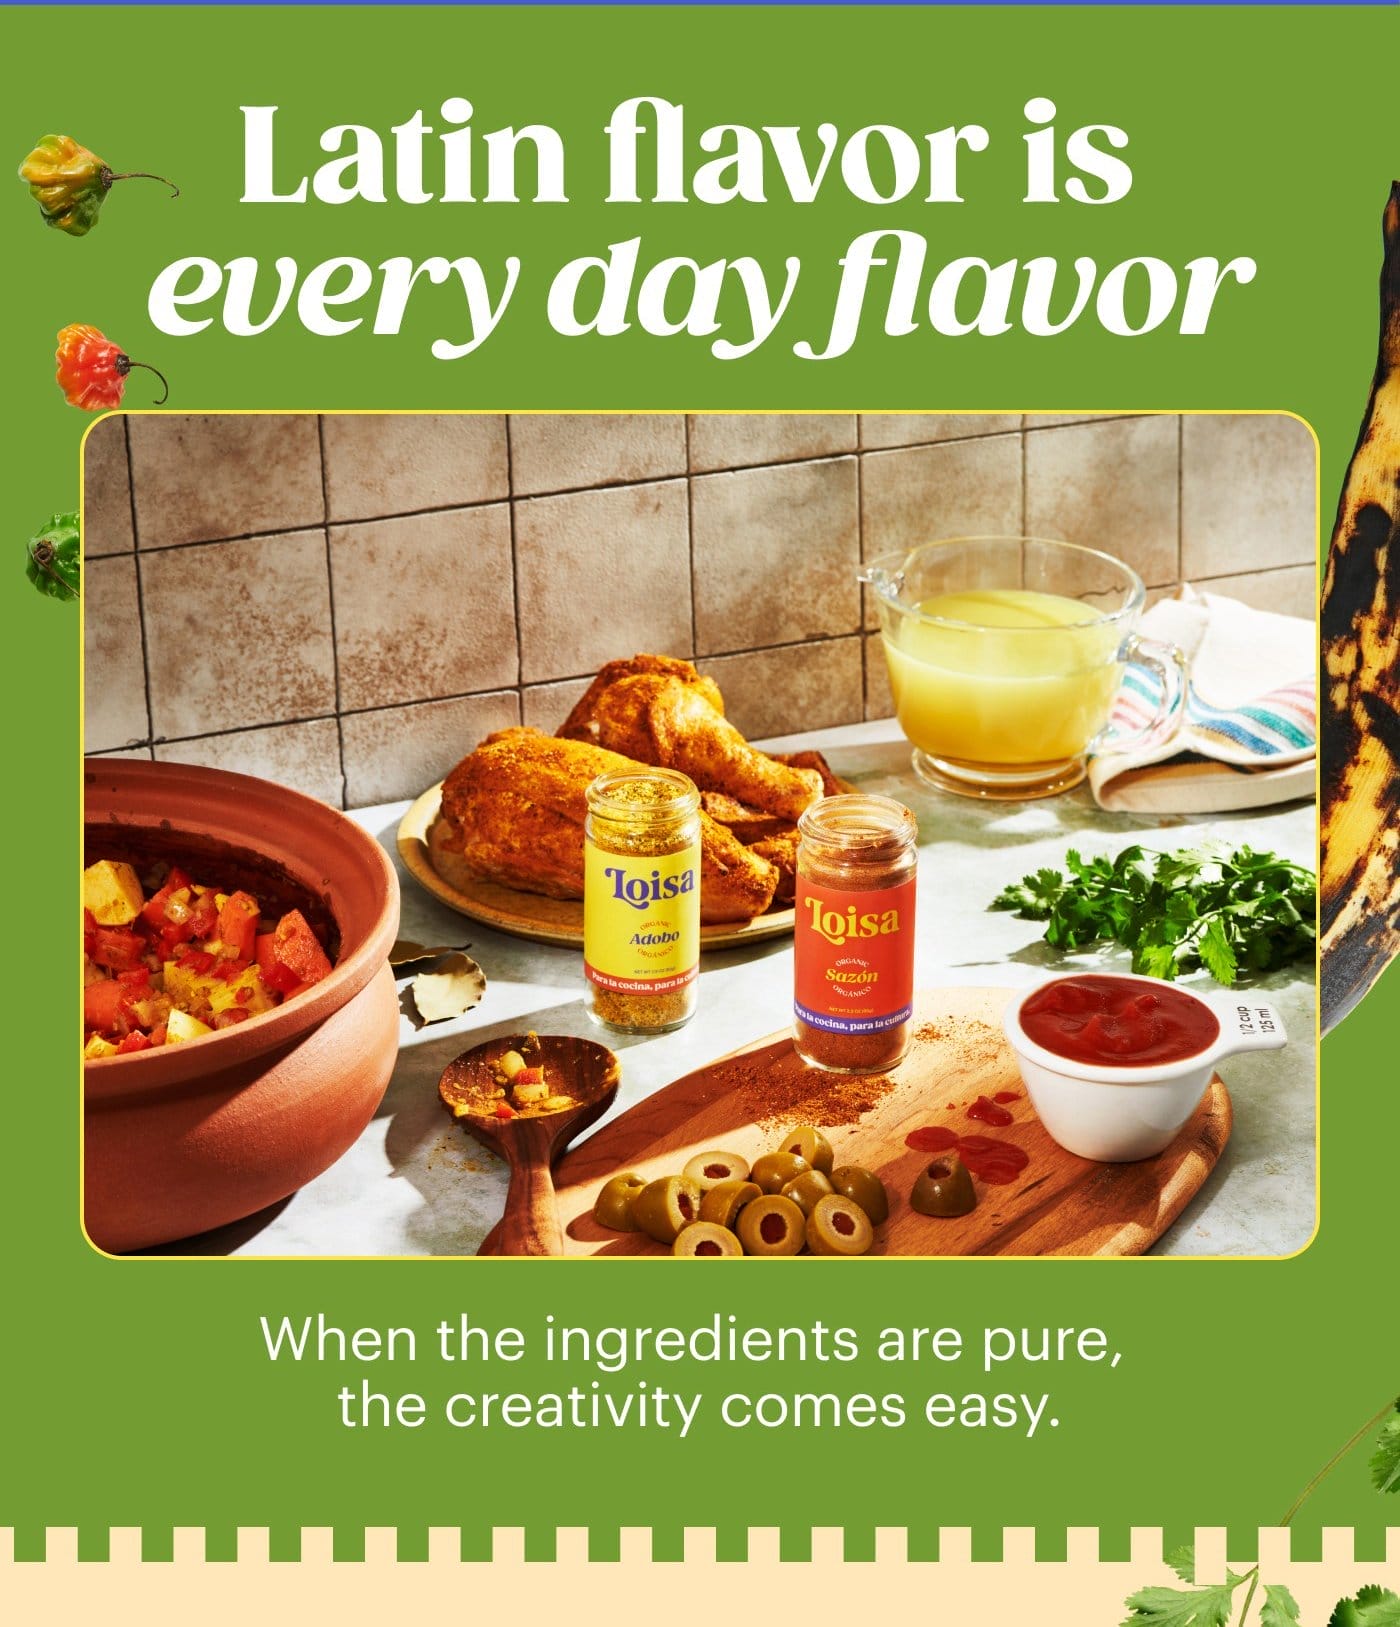 Latin flavor is everyday flavor